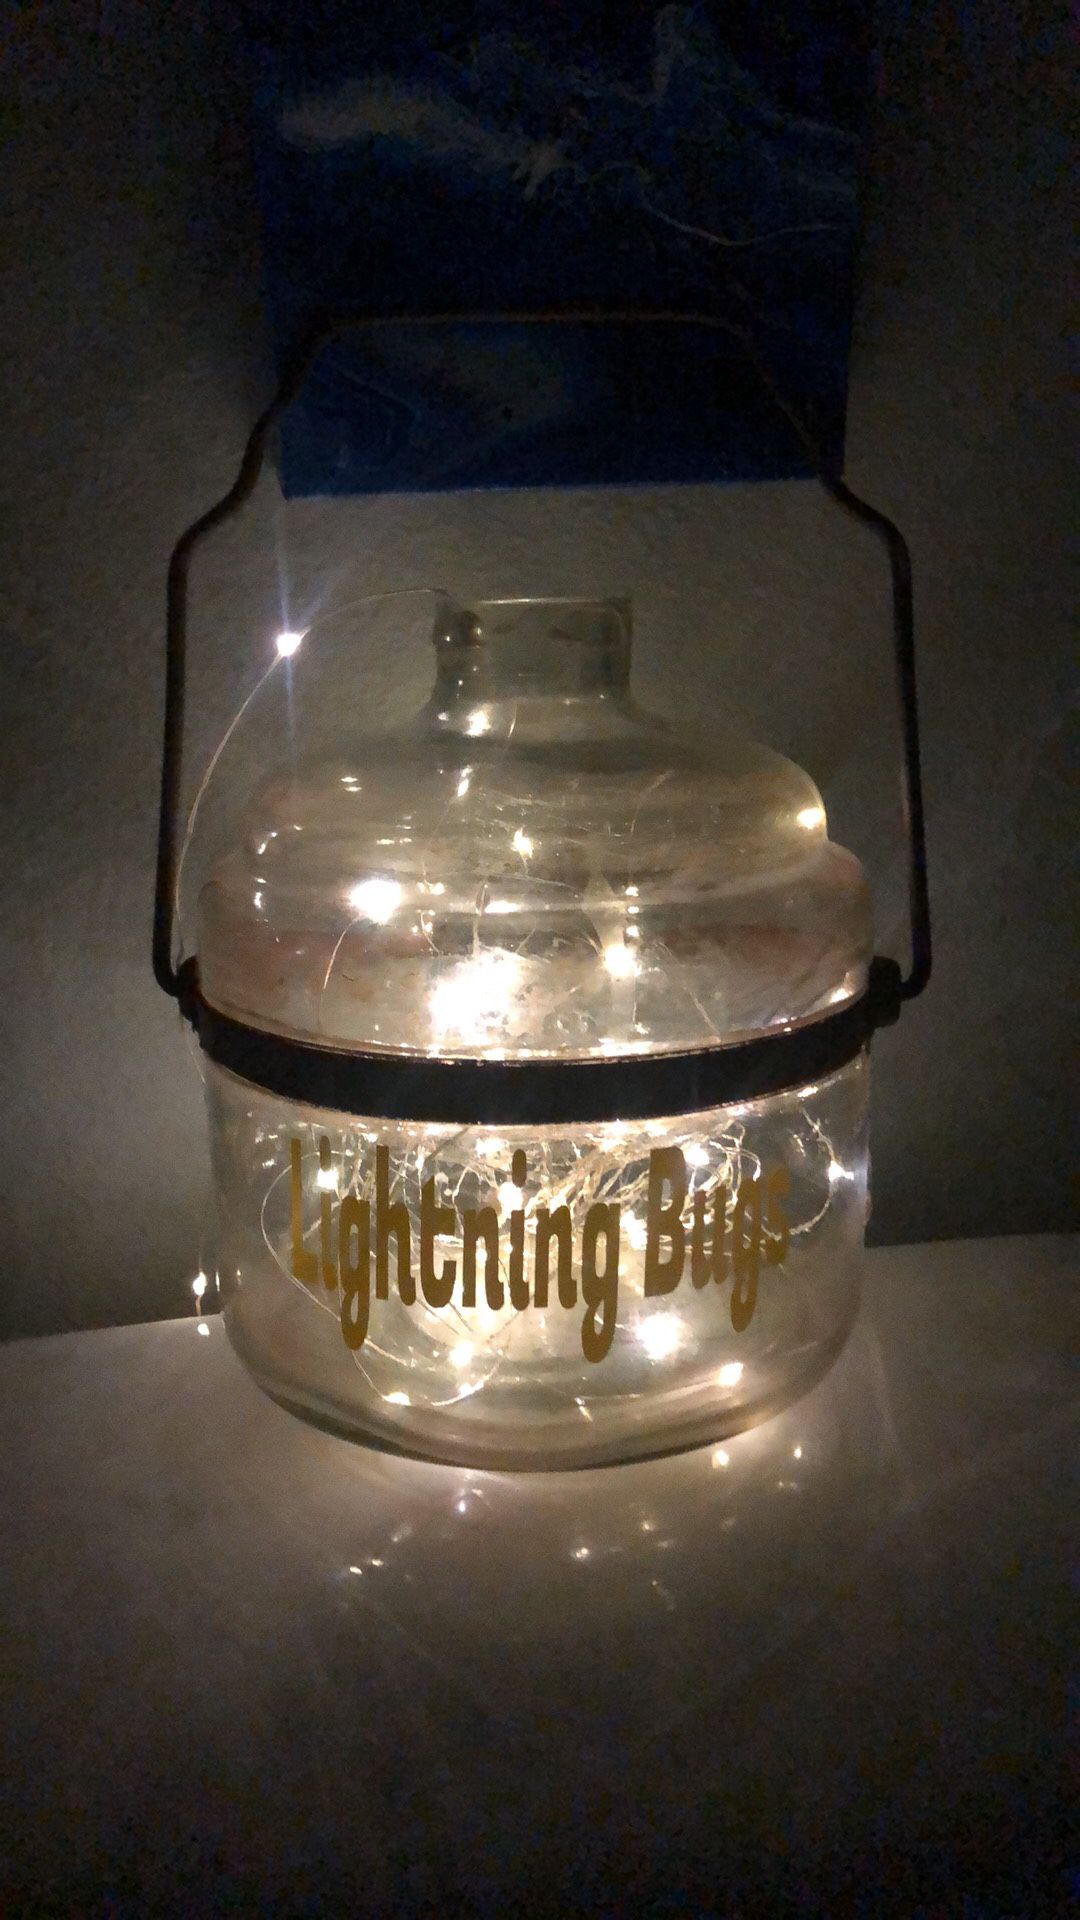 Antique Kerosene Bottle Now Unique Lightning Bug Container 